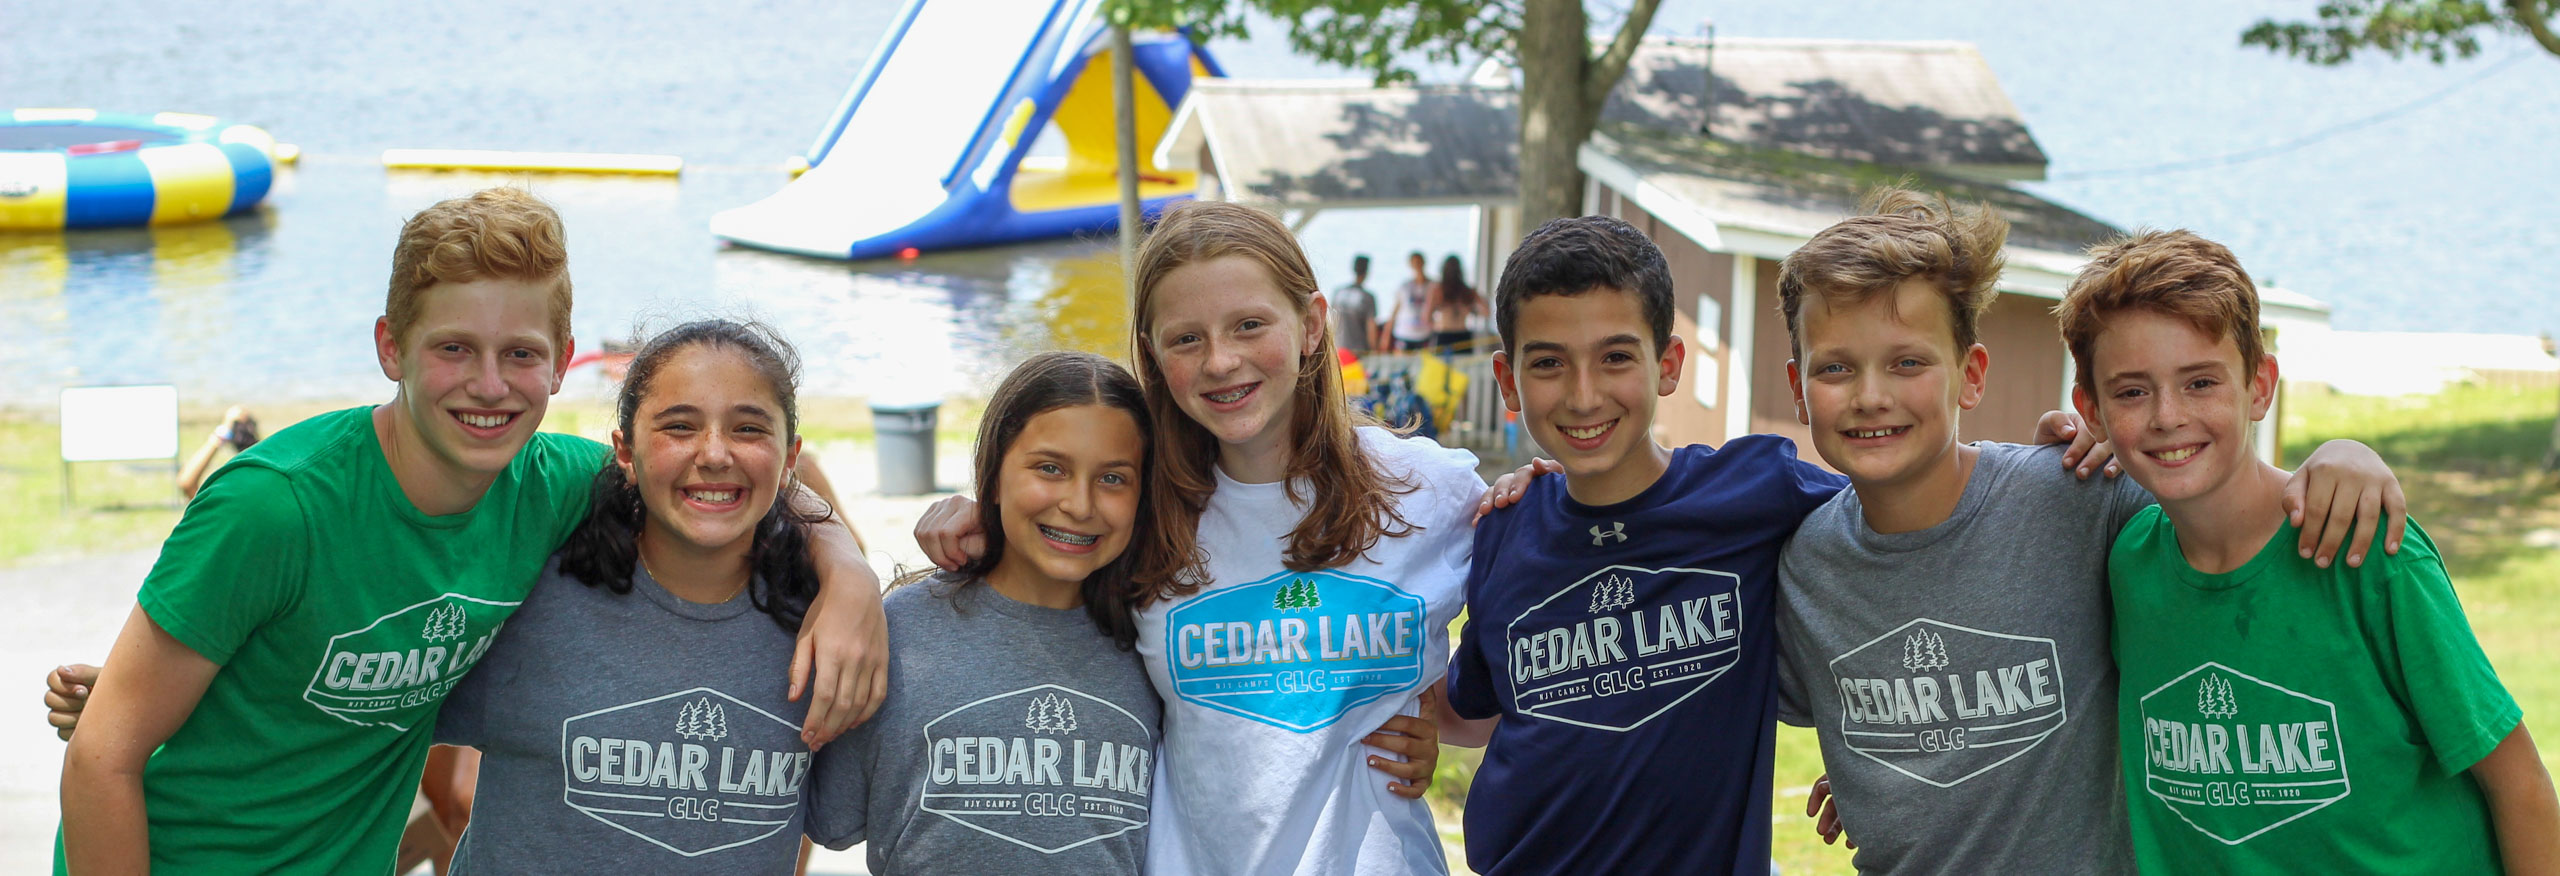 Why Cedar Lake Camp?